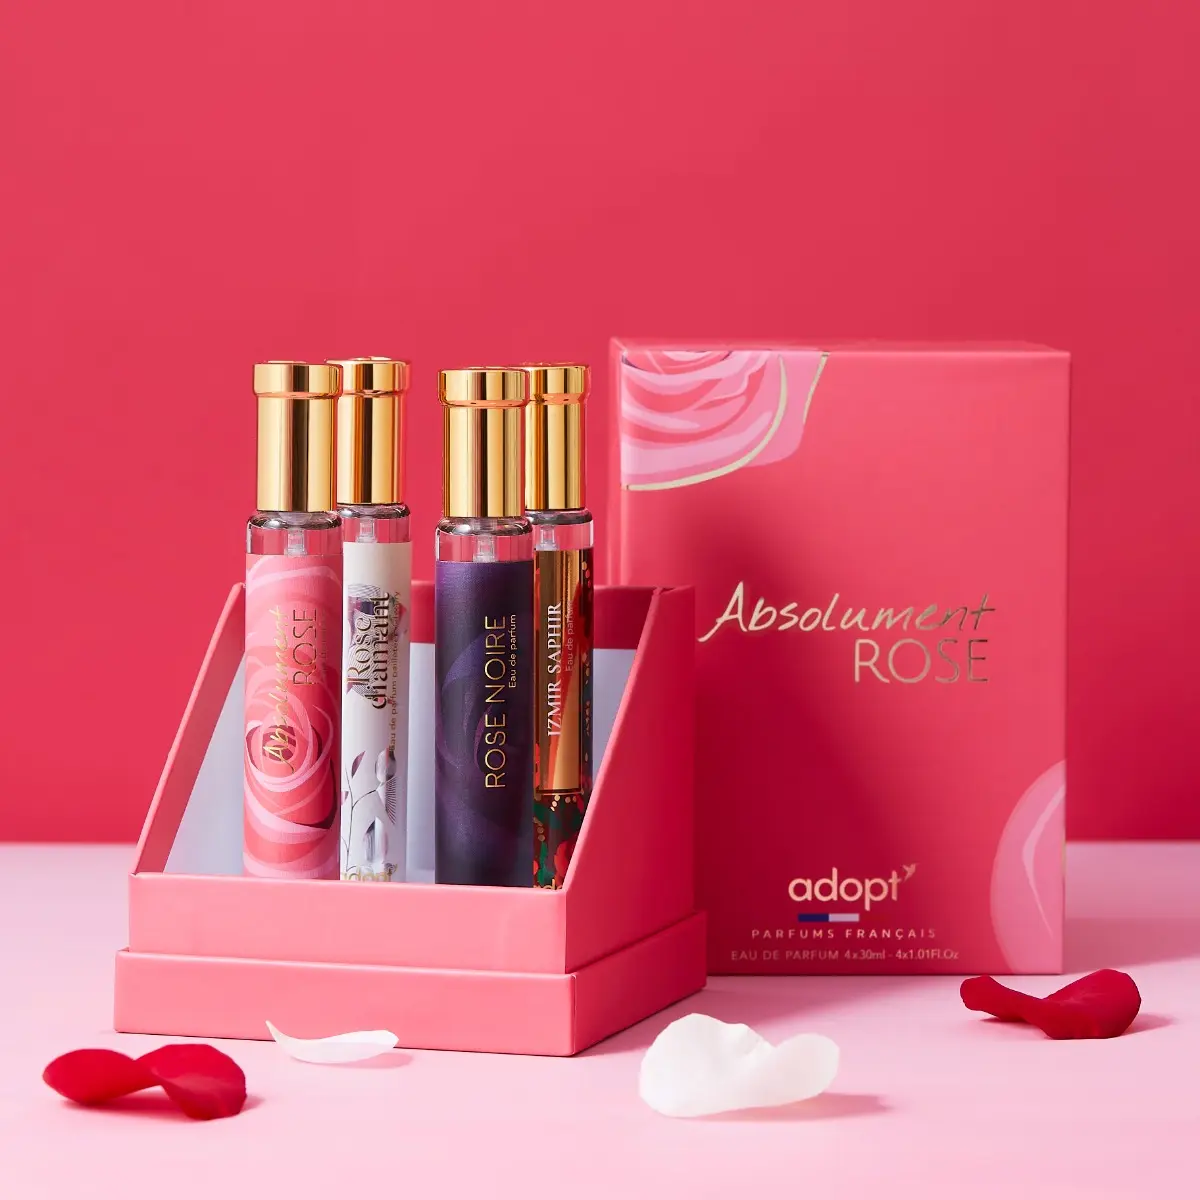 coffret-anniversaire-absolument-rose-adopt-parfum